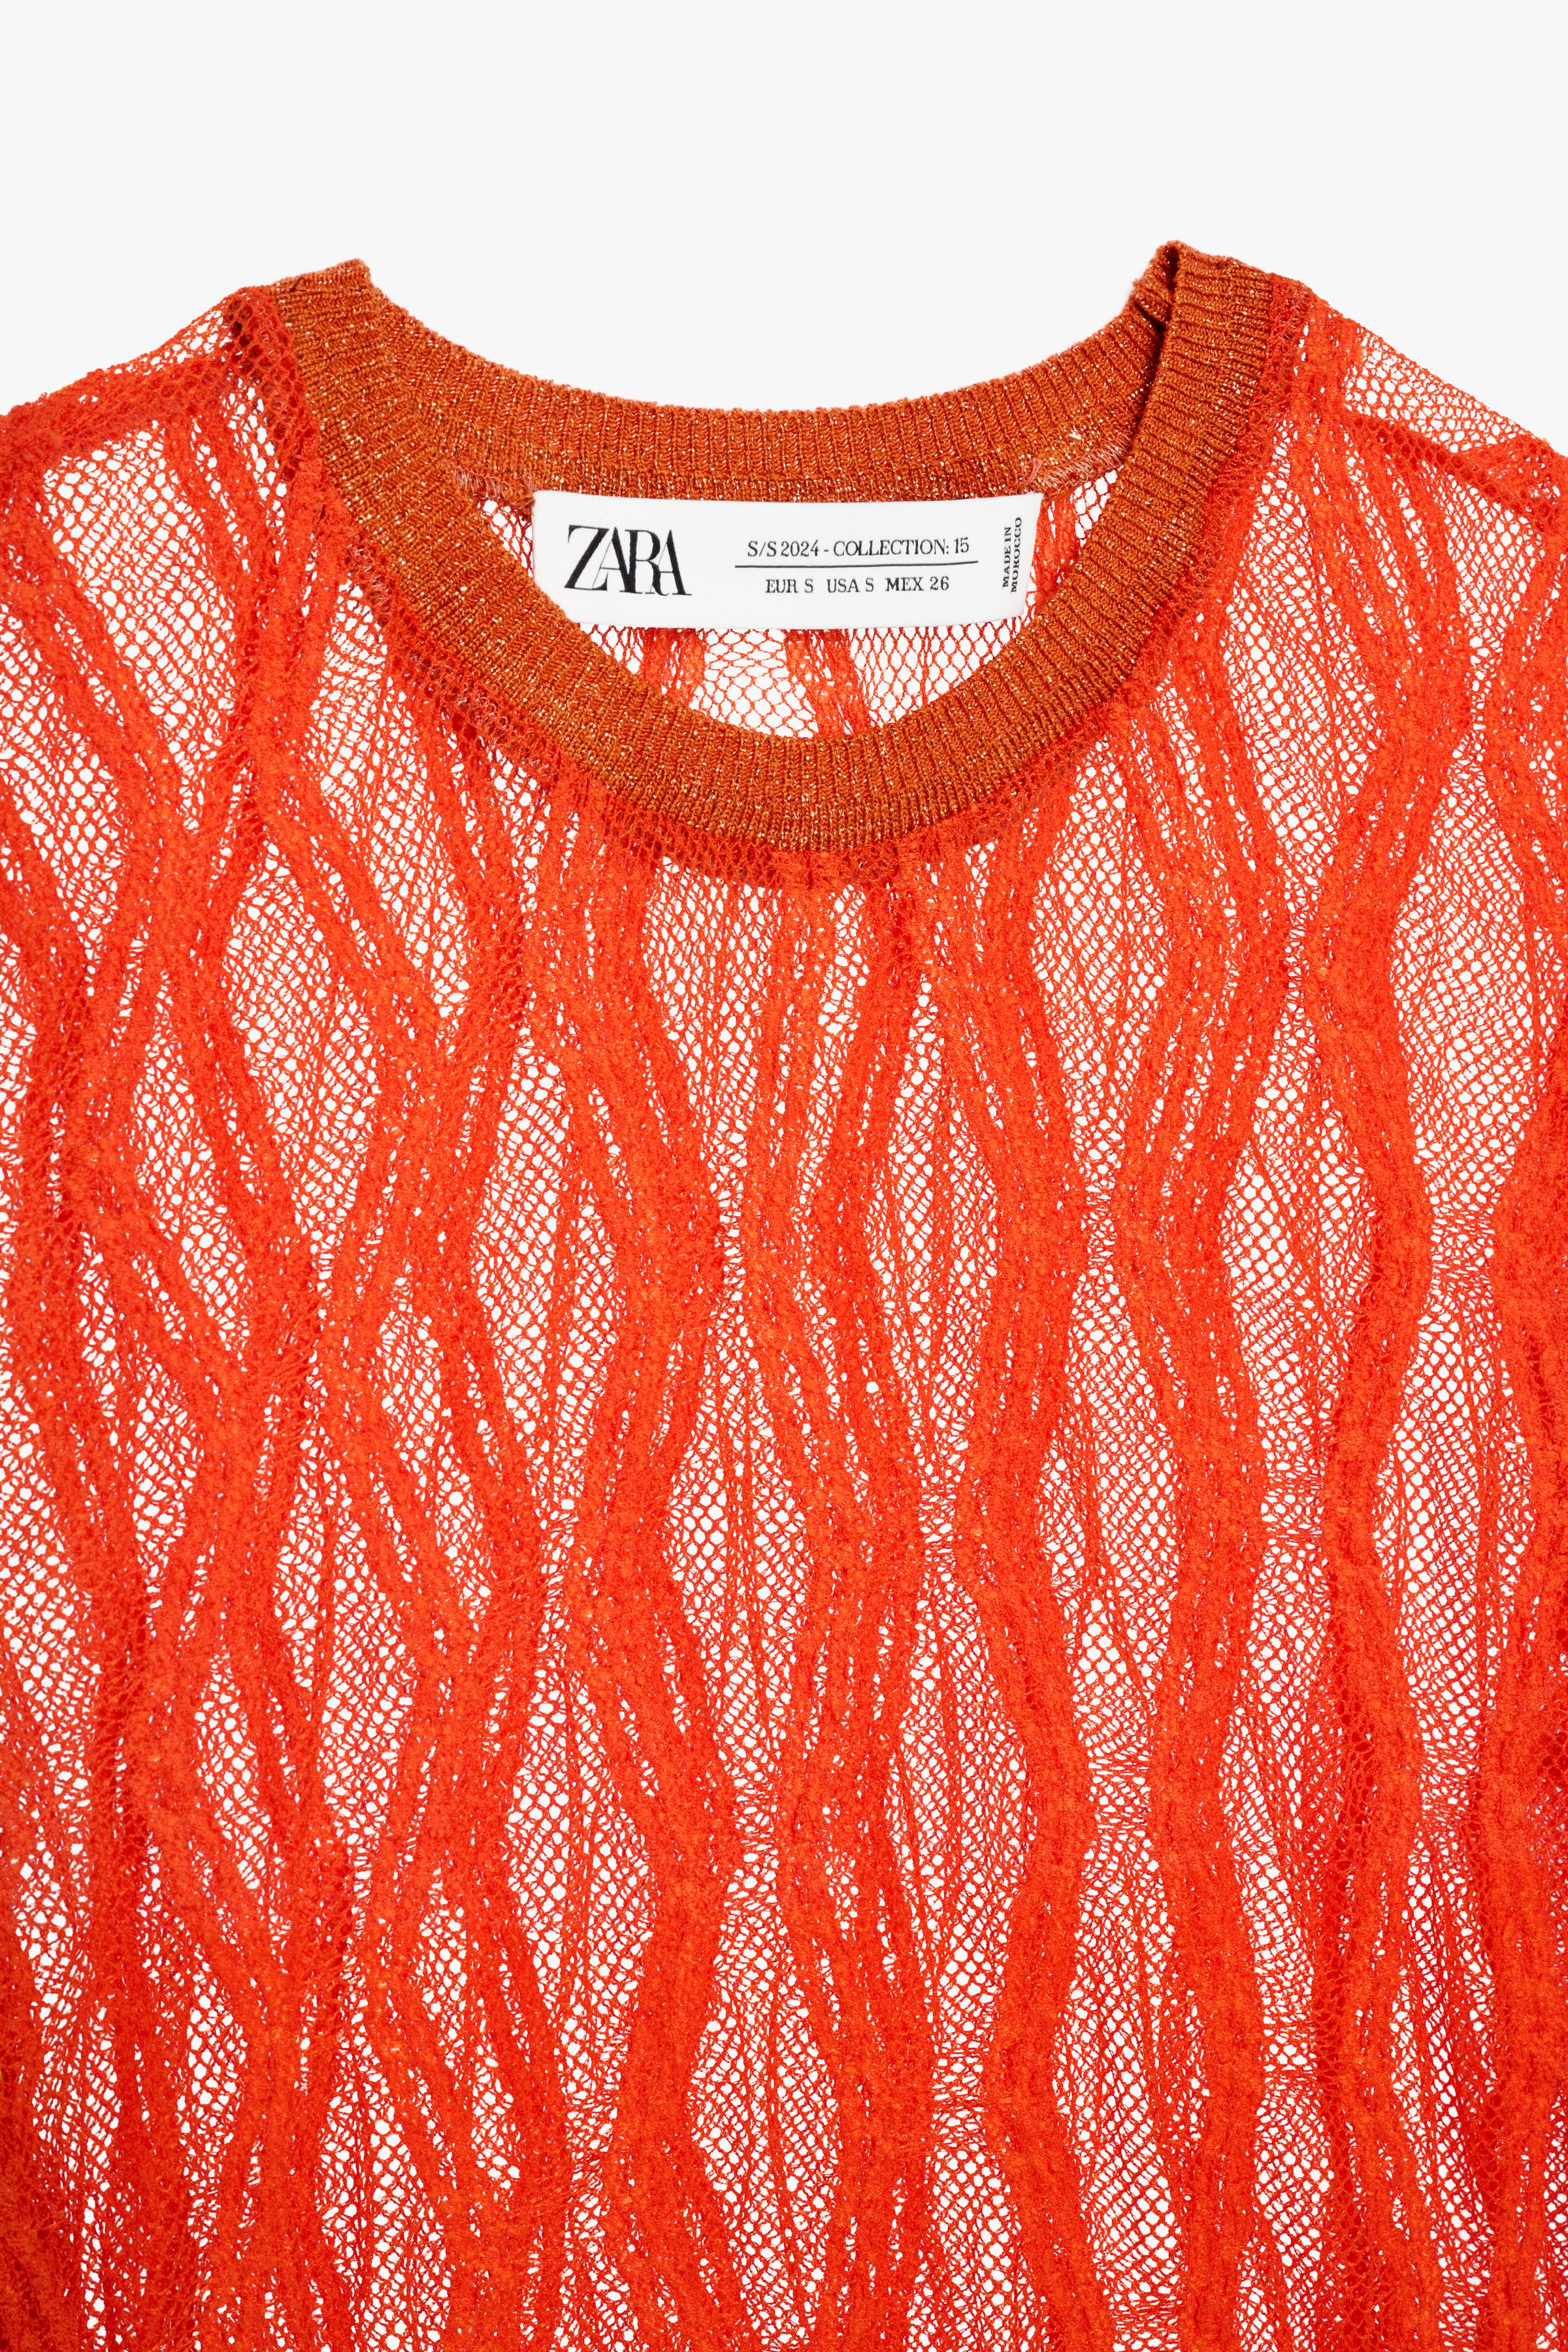 ZARA Ribbed knit cropped cardigan orange 3646/008